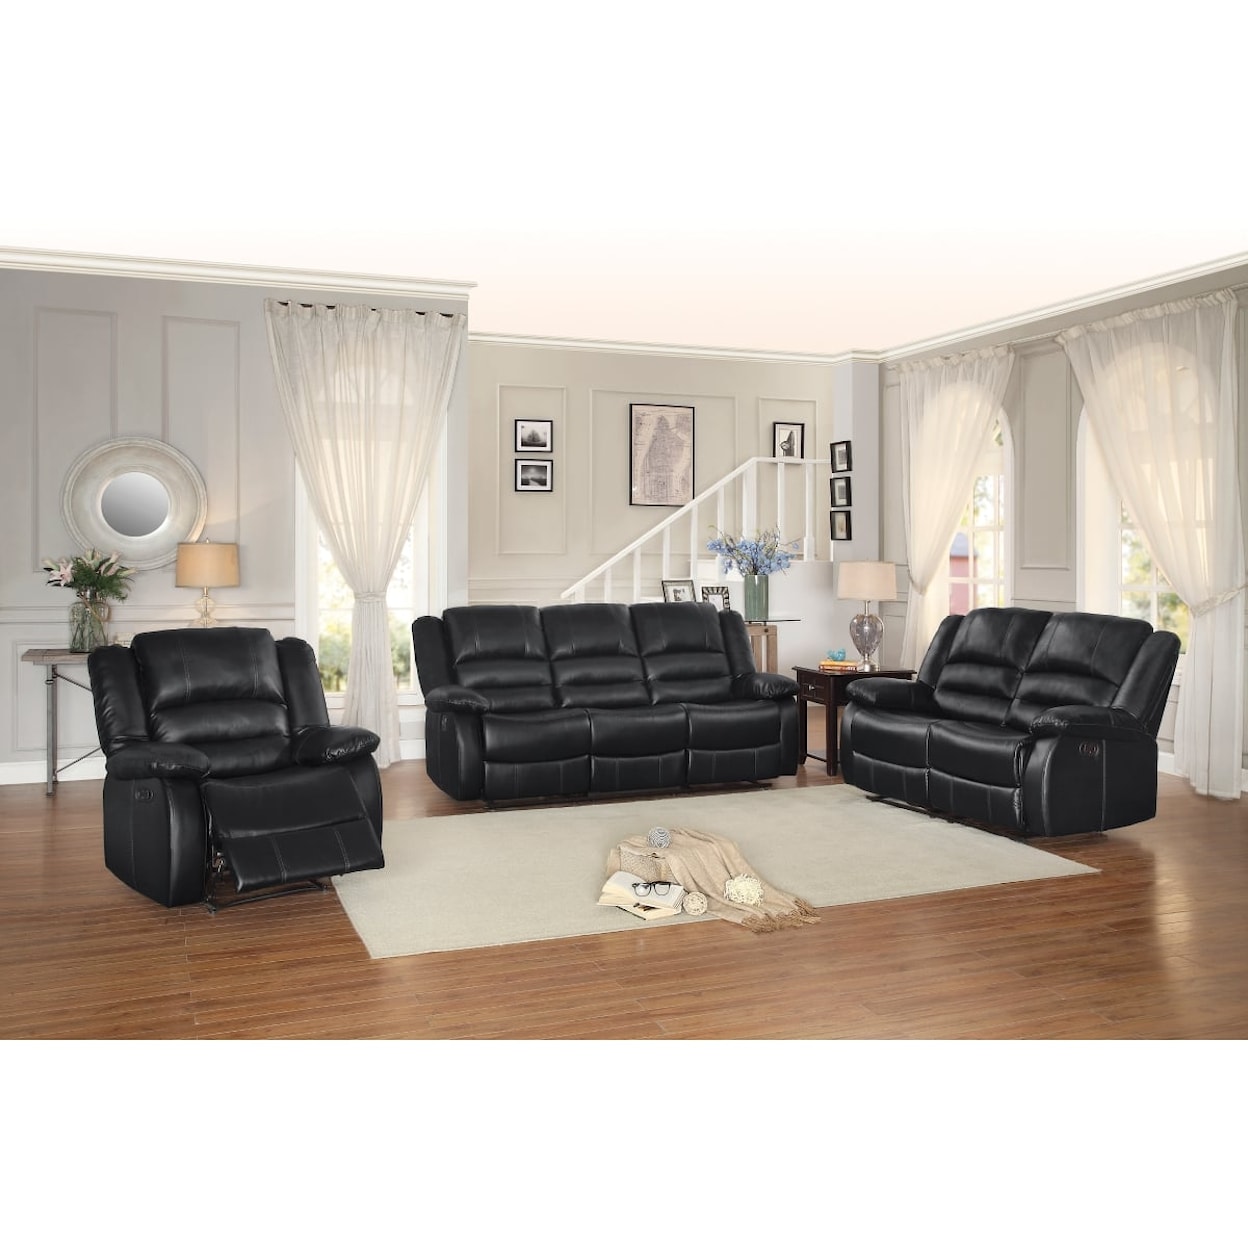 Homelegance Jarita Double Reclining Sofa